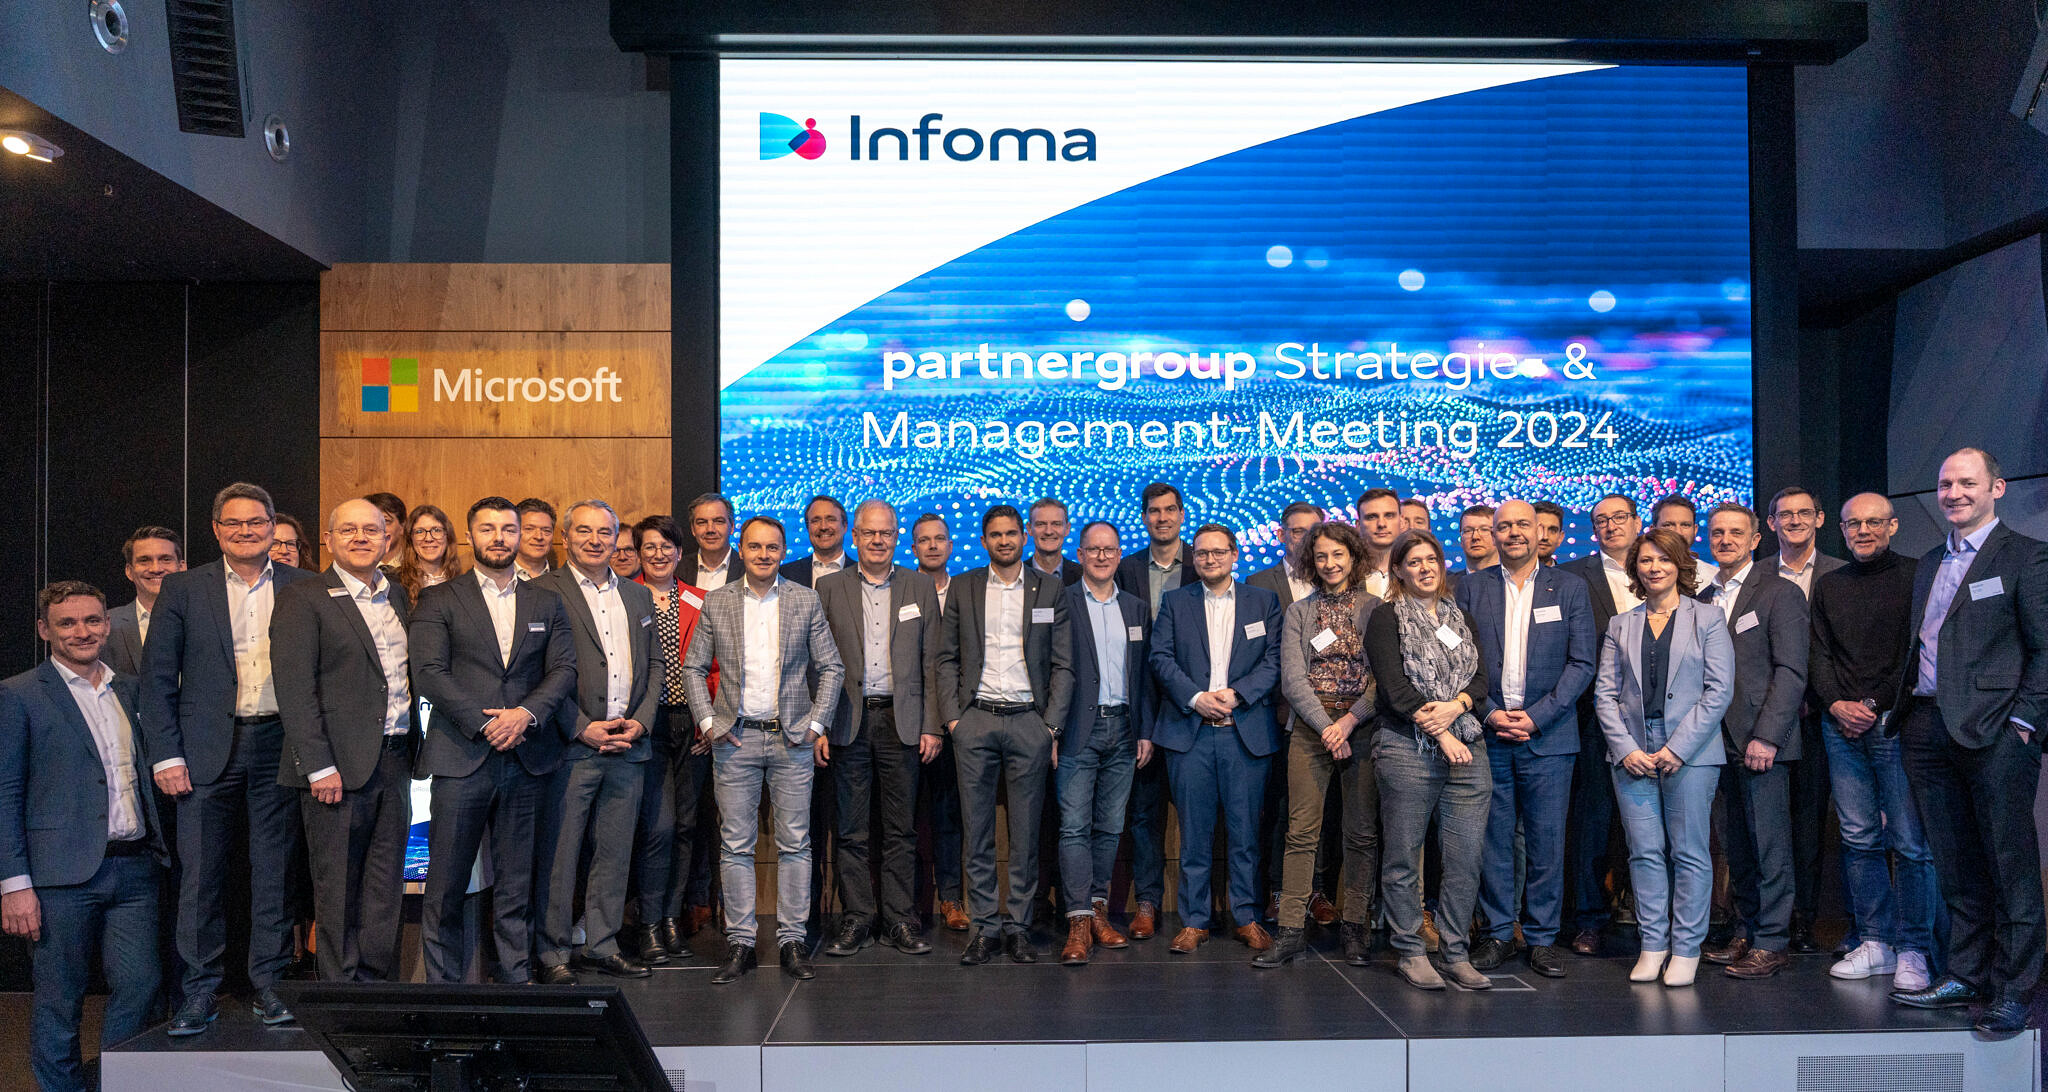 Die Infoma partnergroup